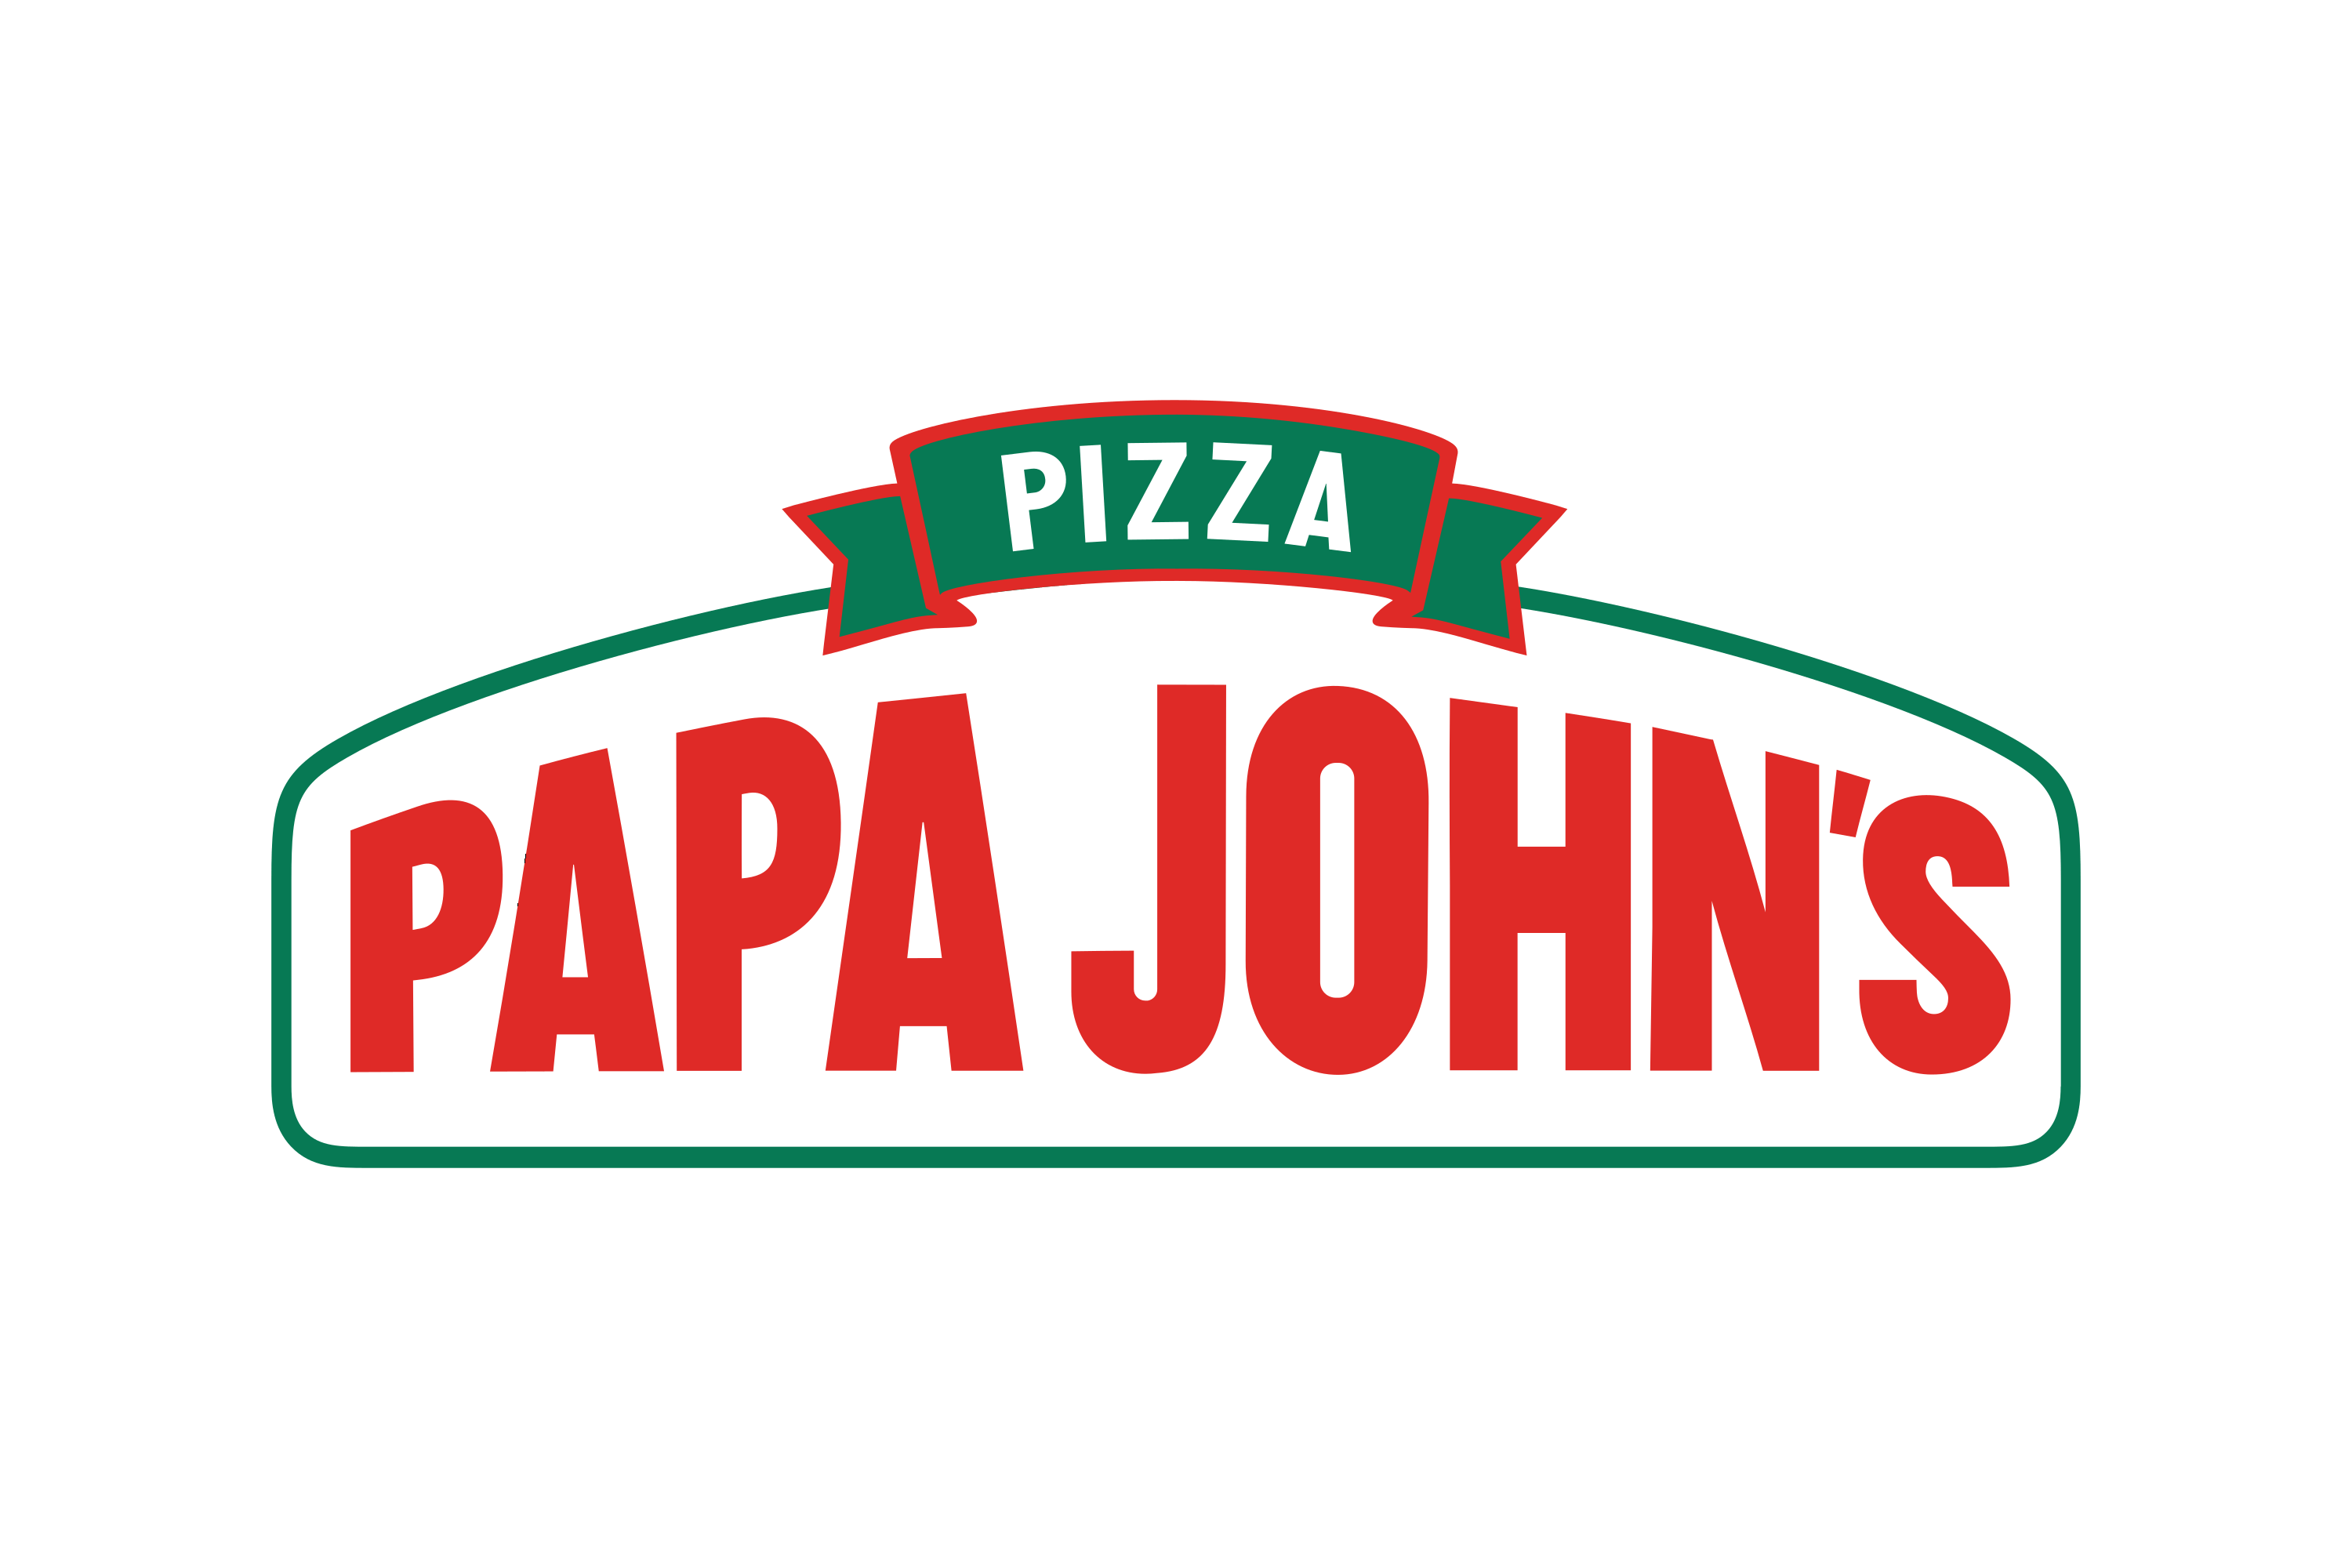 Download Papa John's Pizza Logo in SVG Vector or PNG File Format Logo